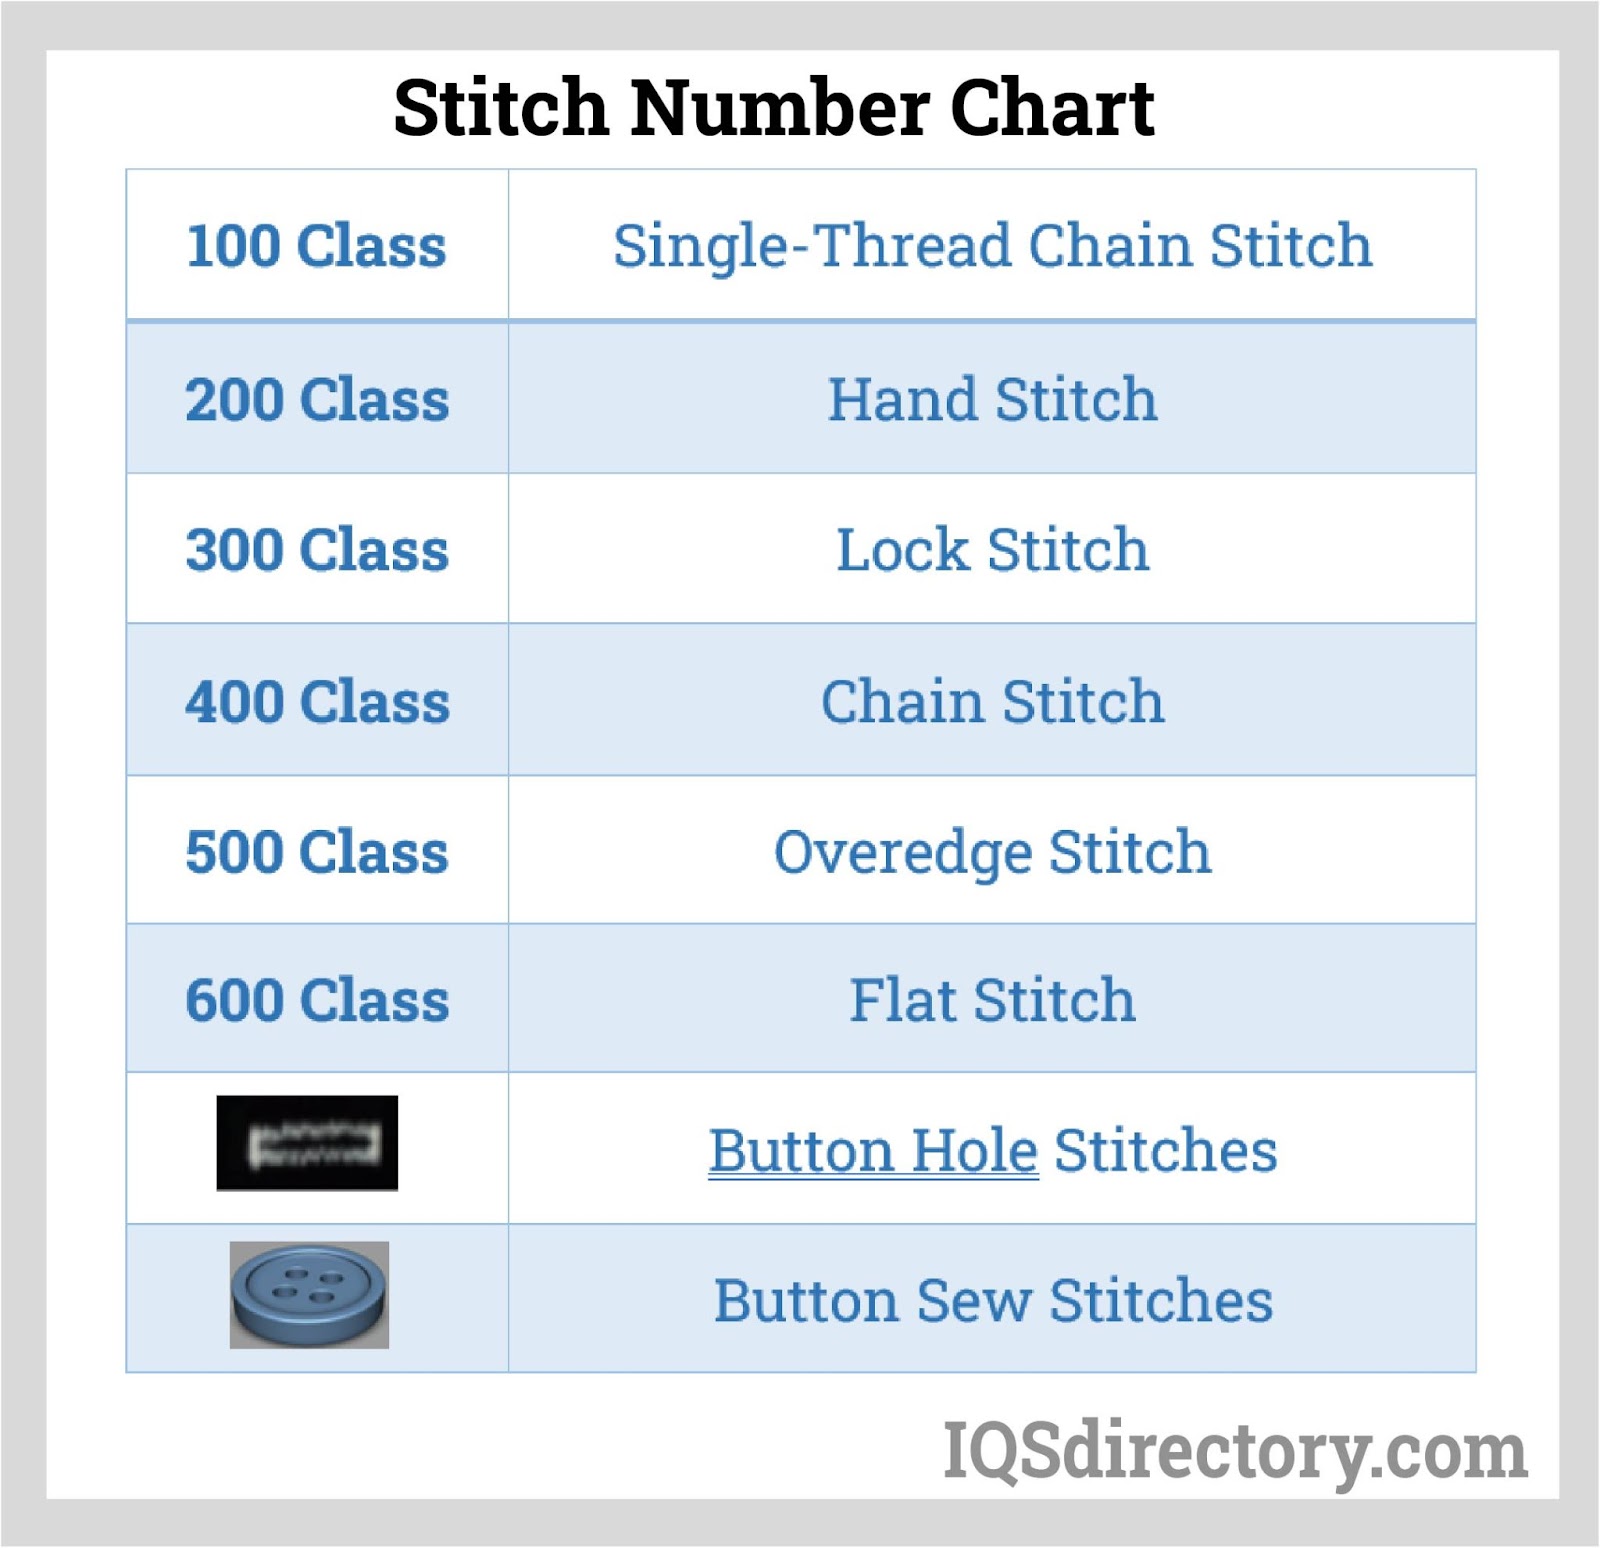 Stitch Number Chart